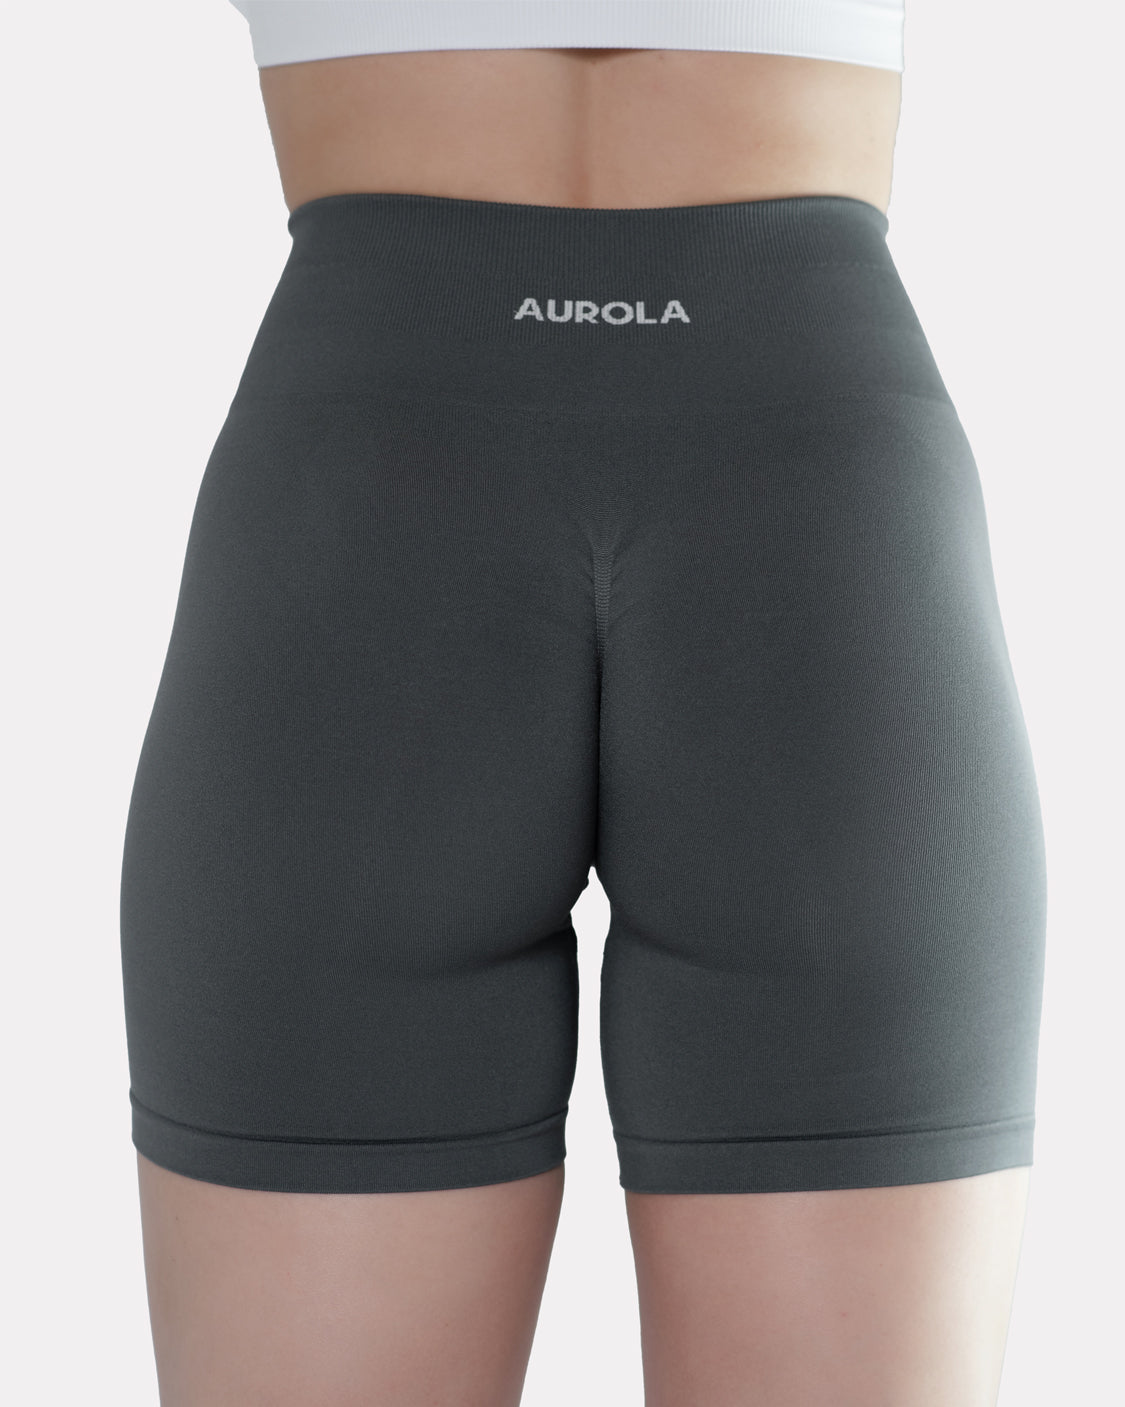 Aurola intensify 4.5” shorts, Women's Fashion, Activewear on Carousell